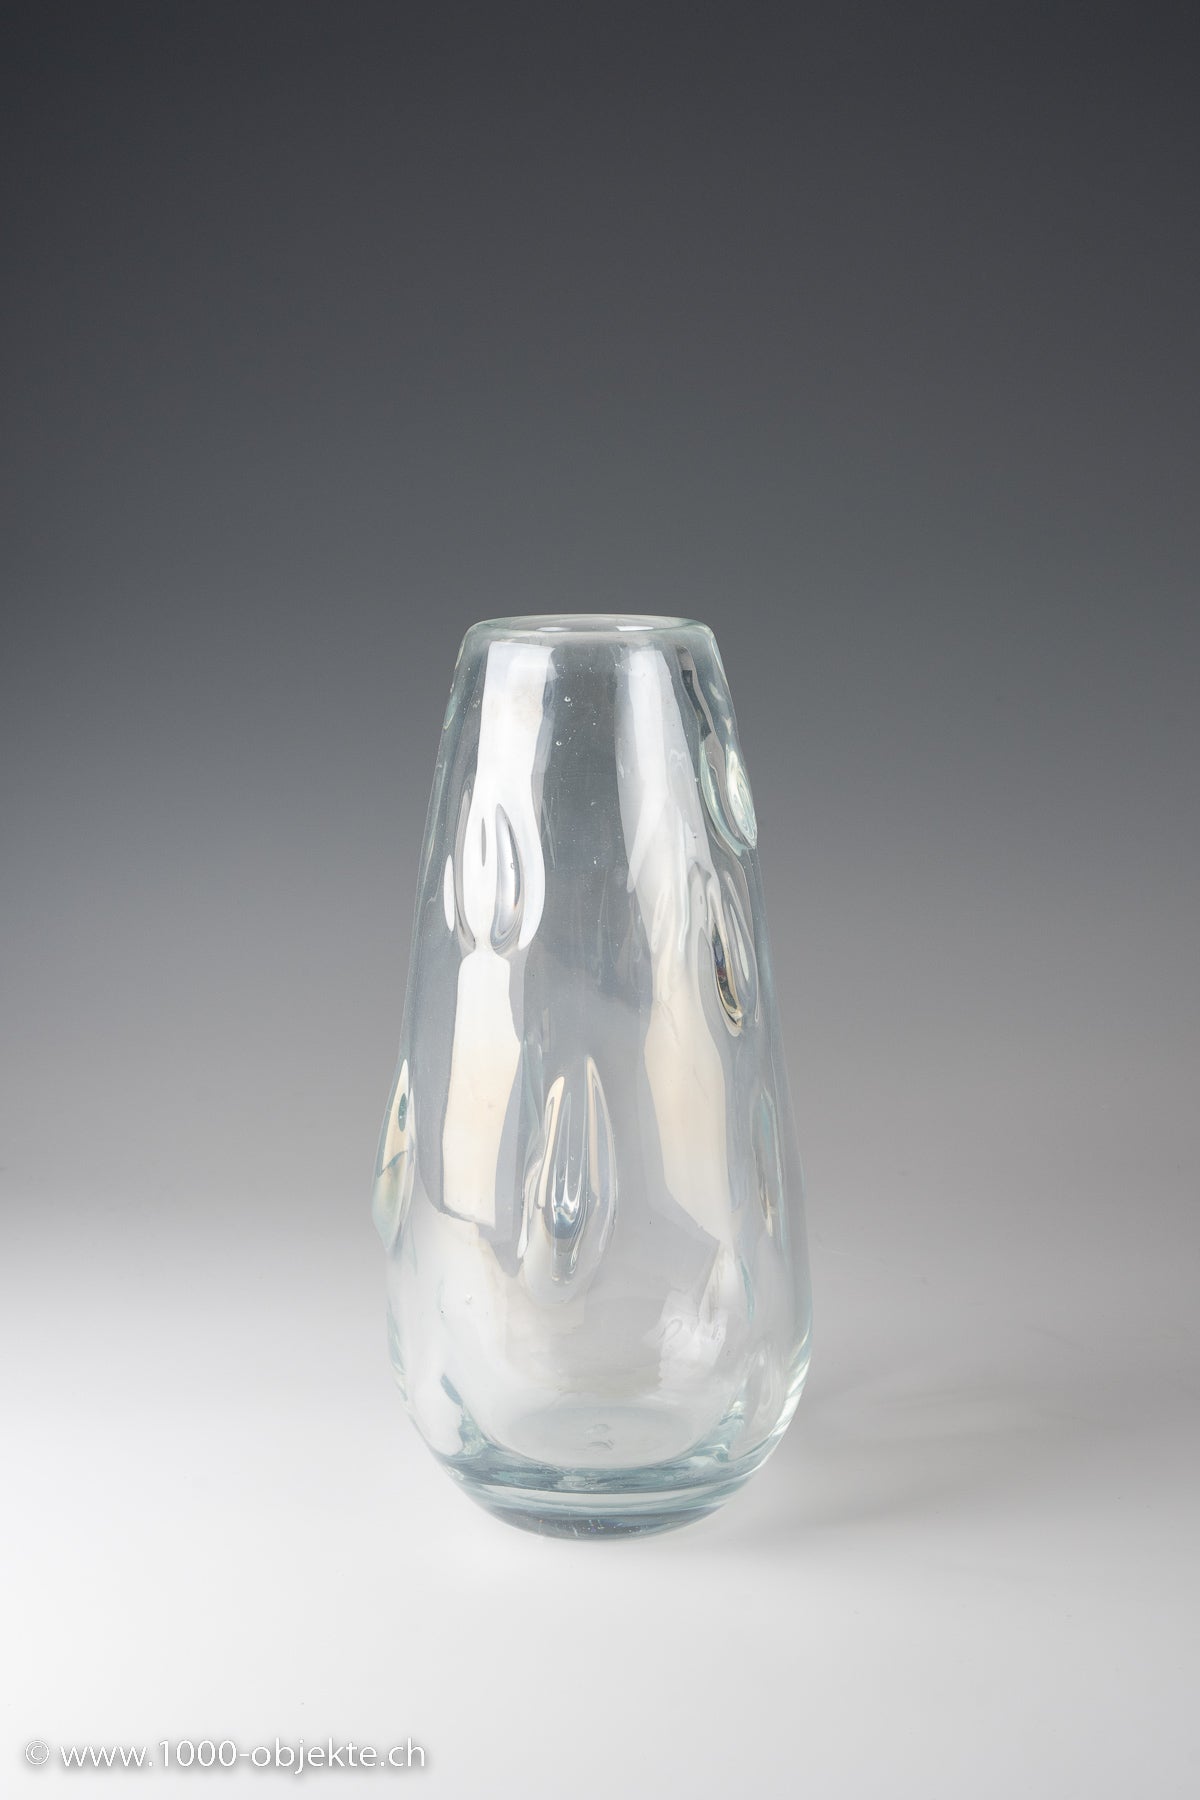 Significant Barovier & Toso Murano Glass Vase ca. 1940 iridescence